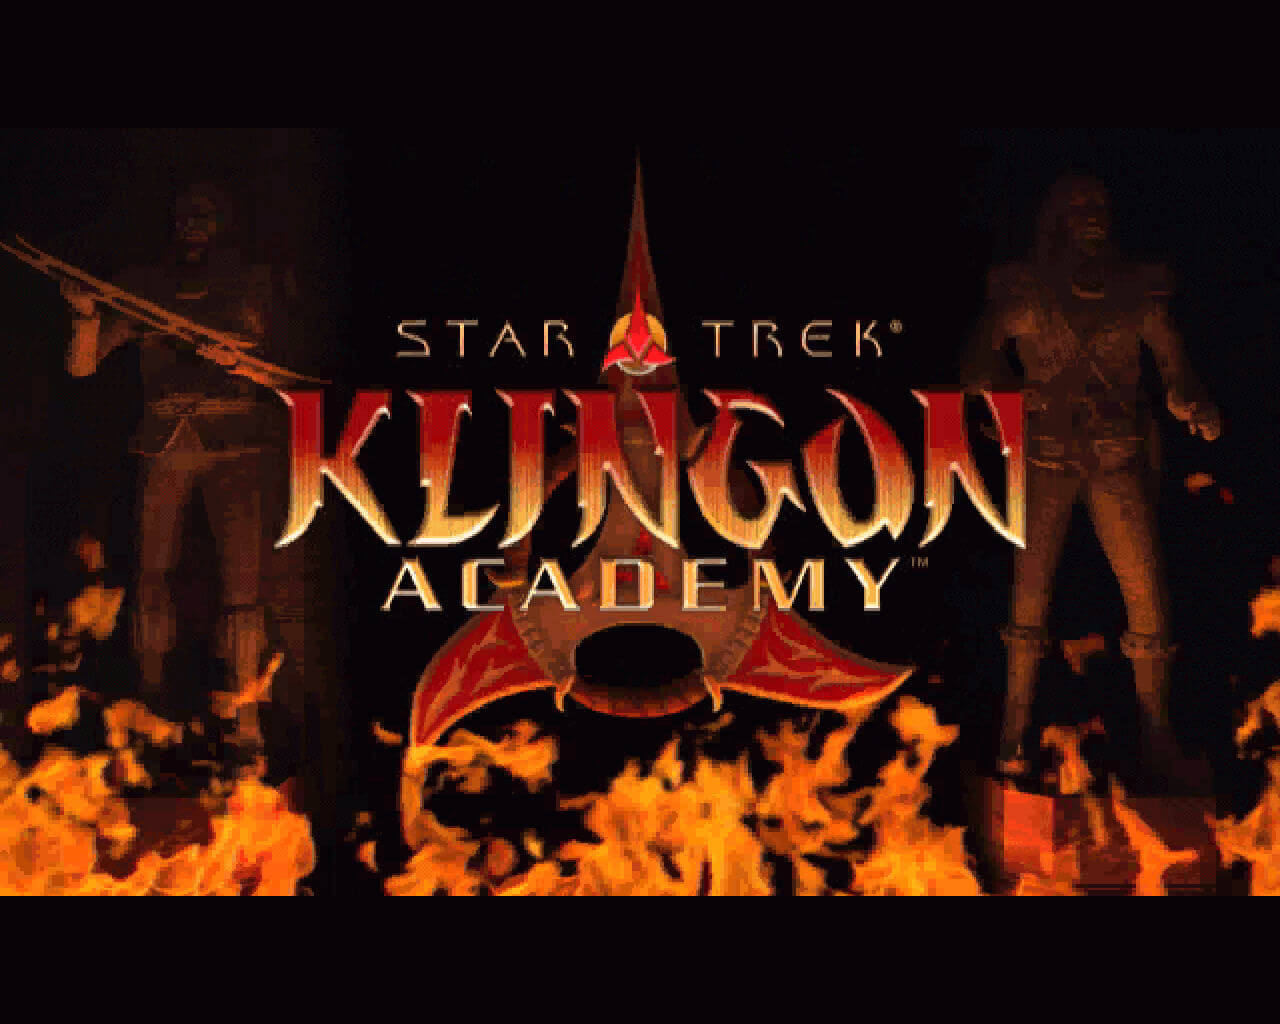 klingon academy download full version